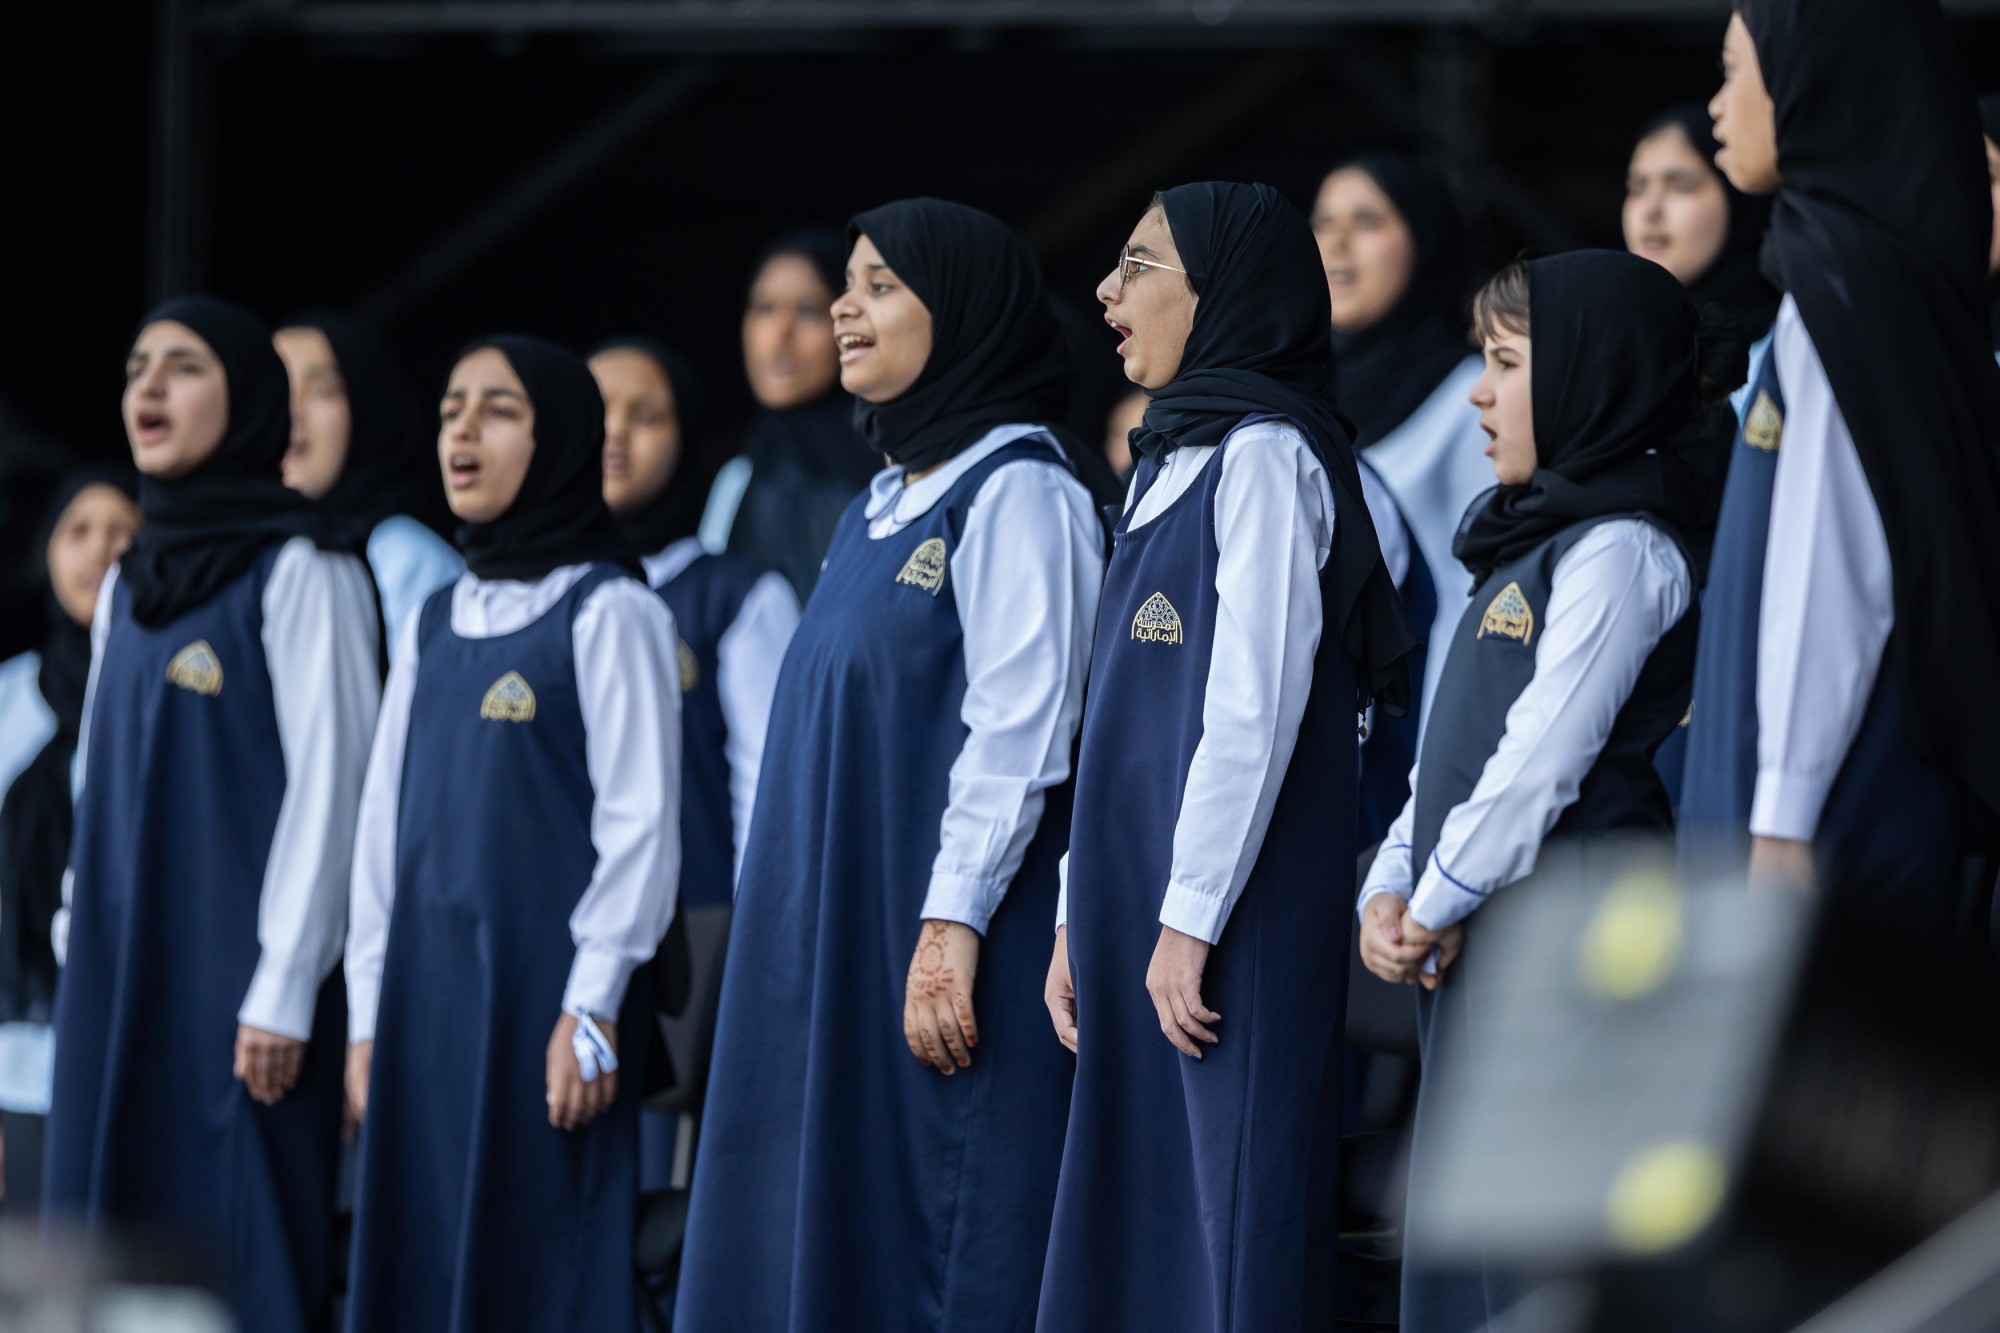 School choirs perform ‘Nasheed Al Wasl’ at Jubilee Stage m66551